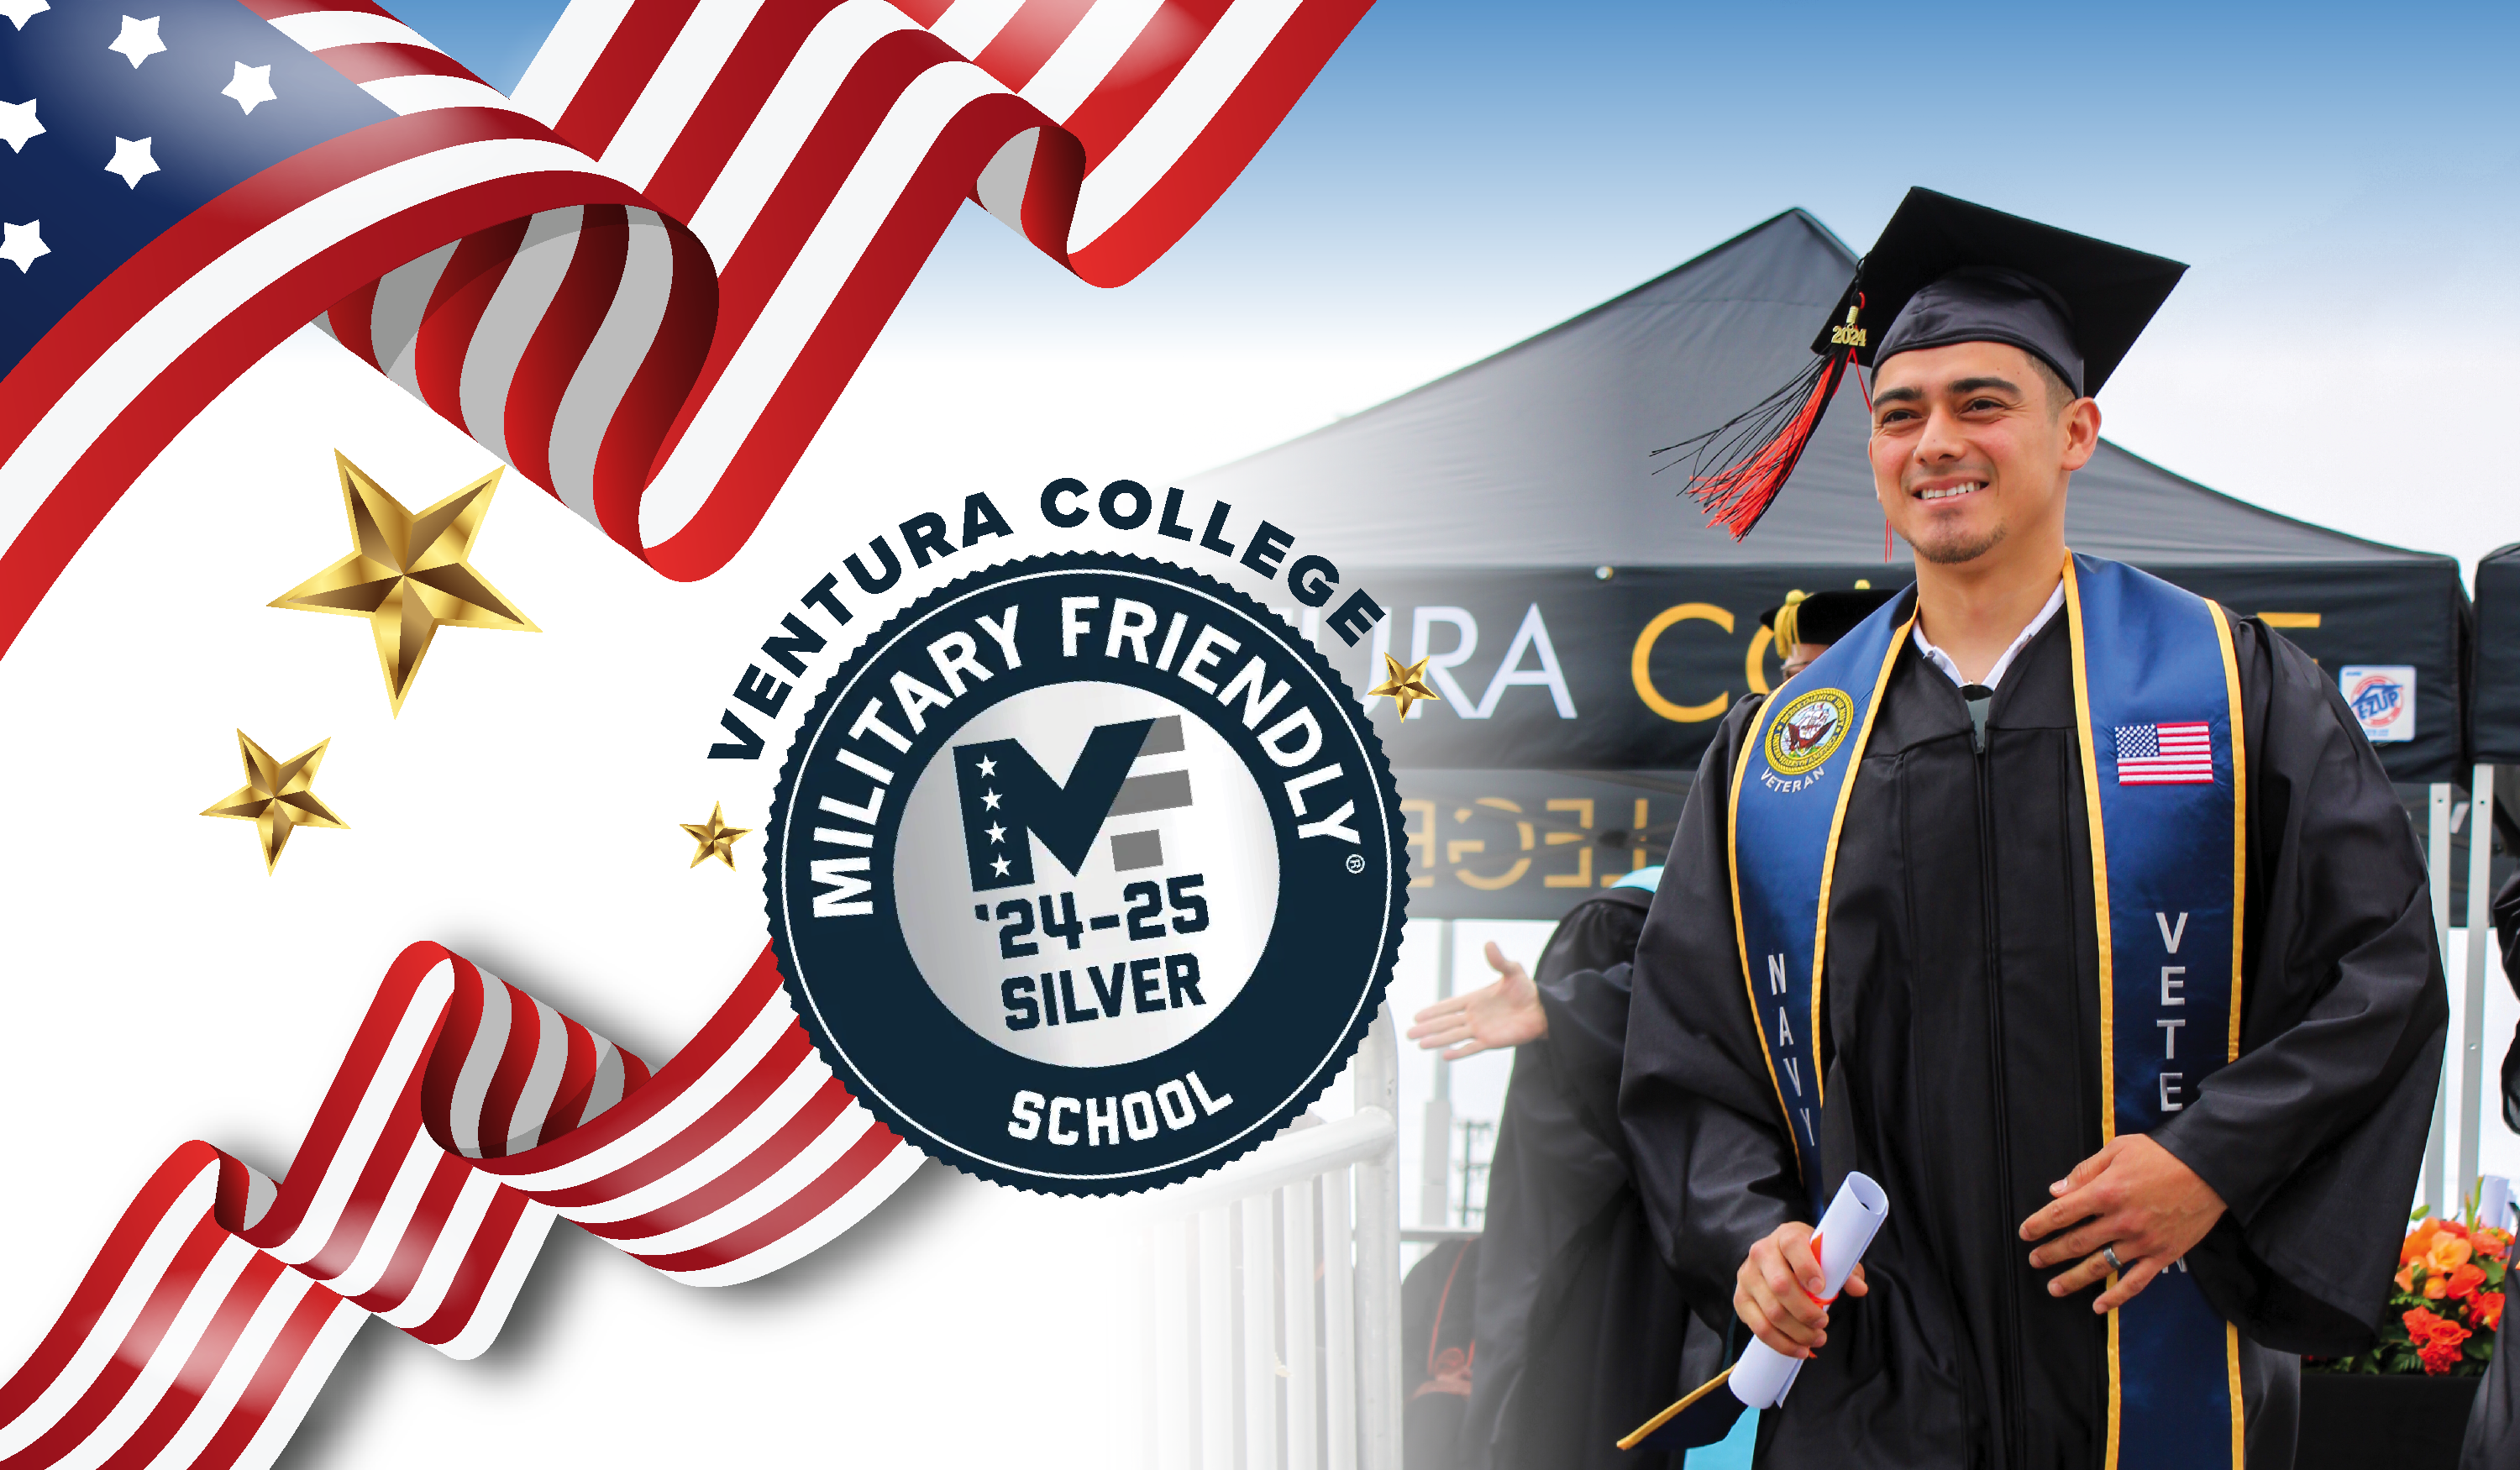 Ventura College military friendly school with image of graduating veteran